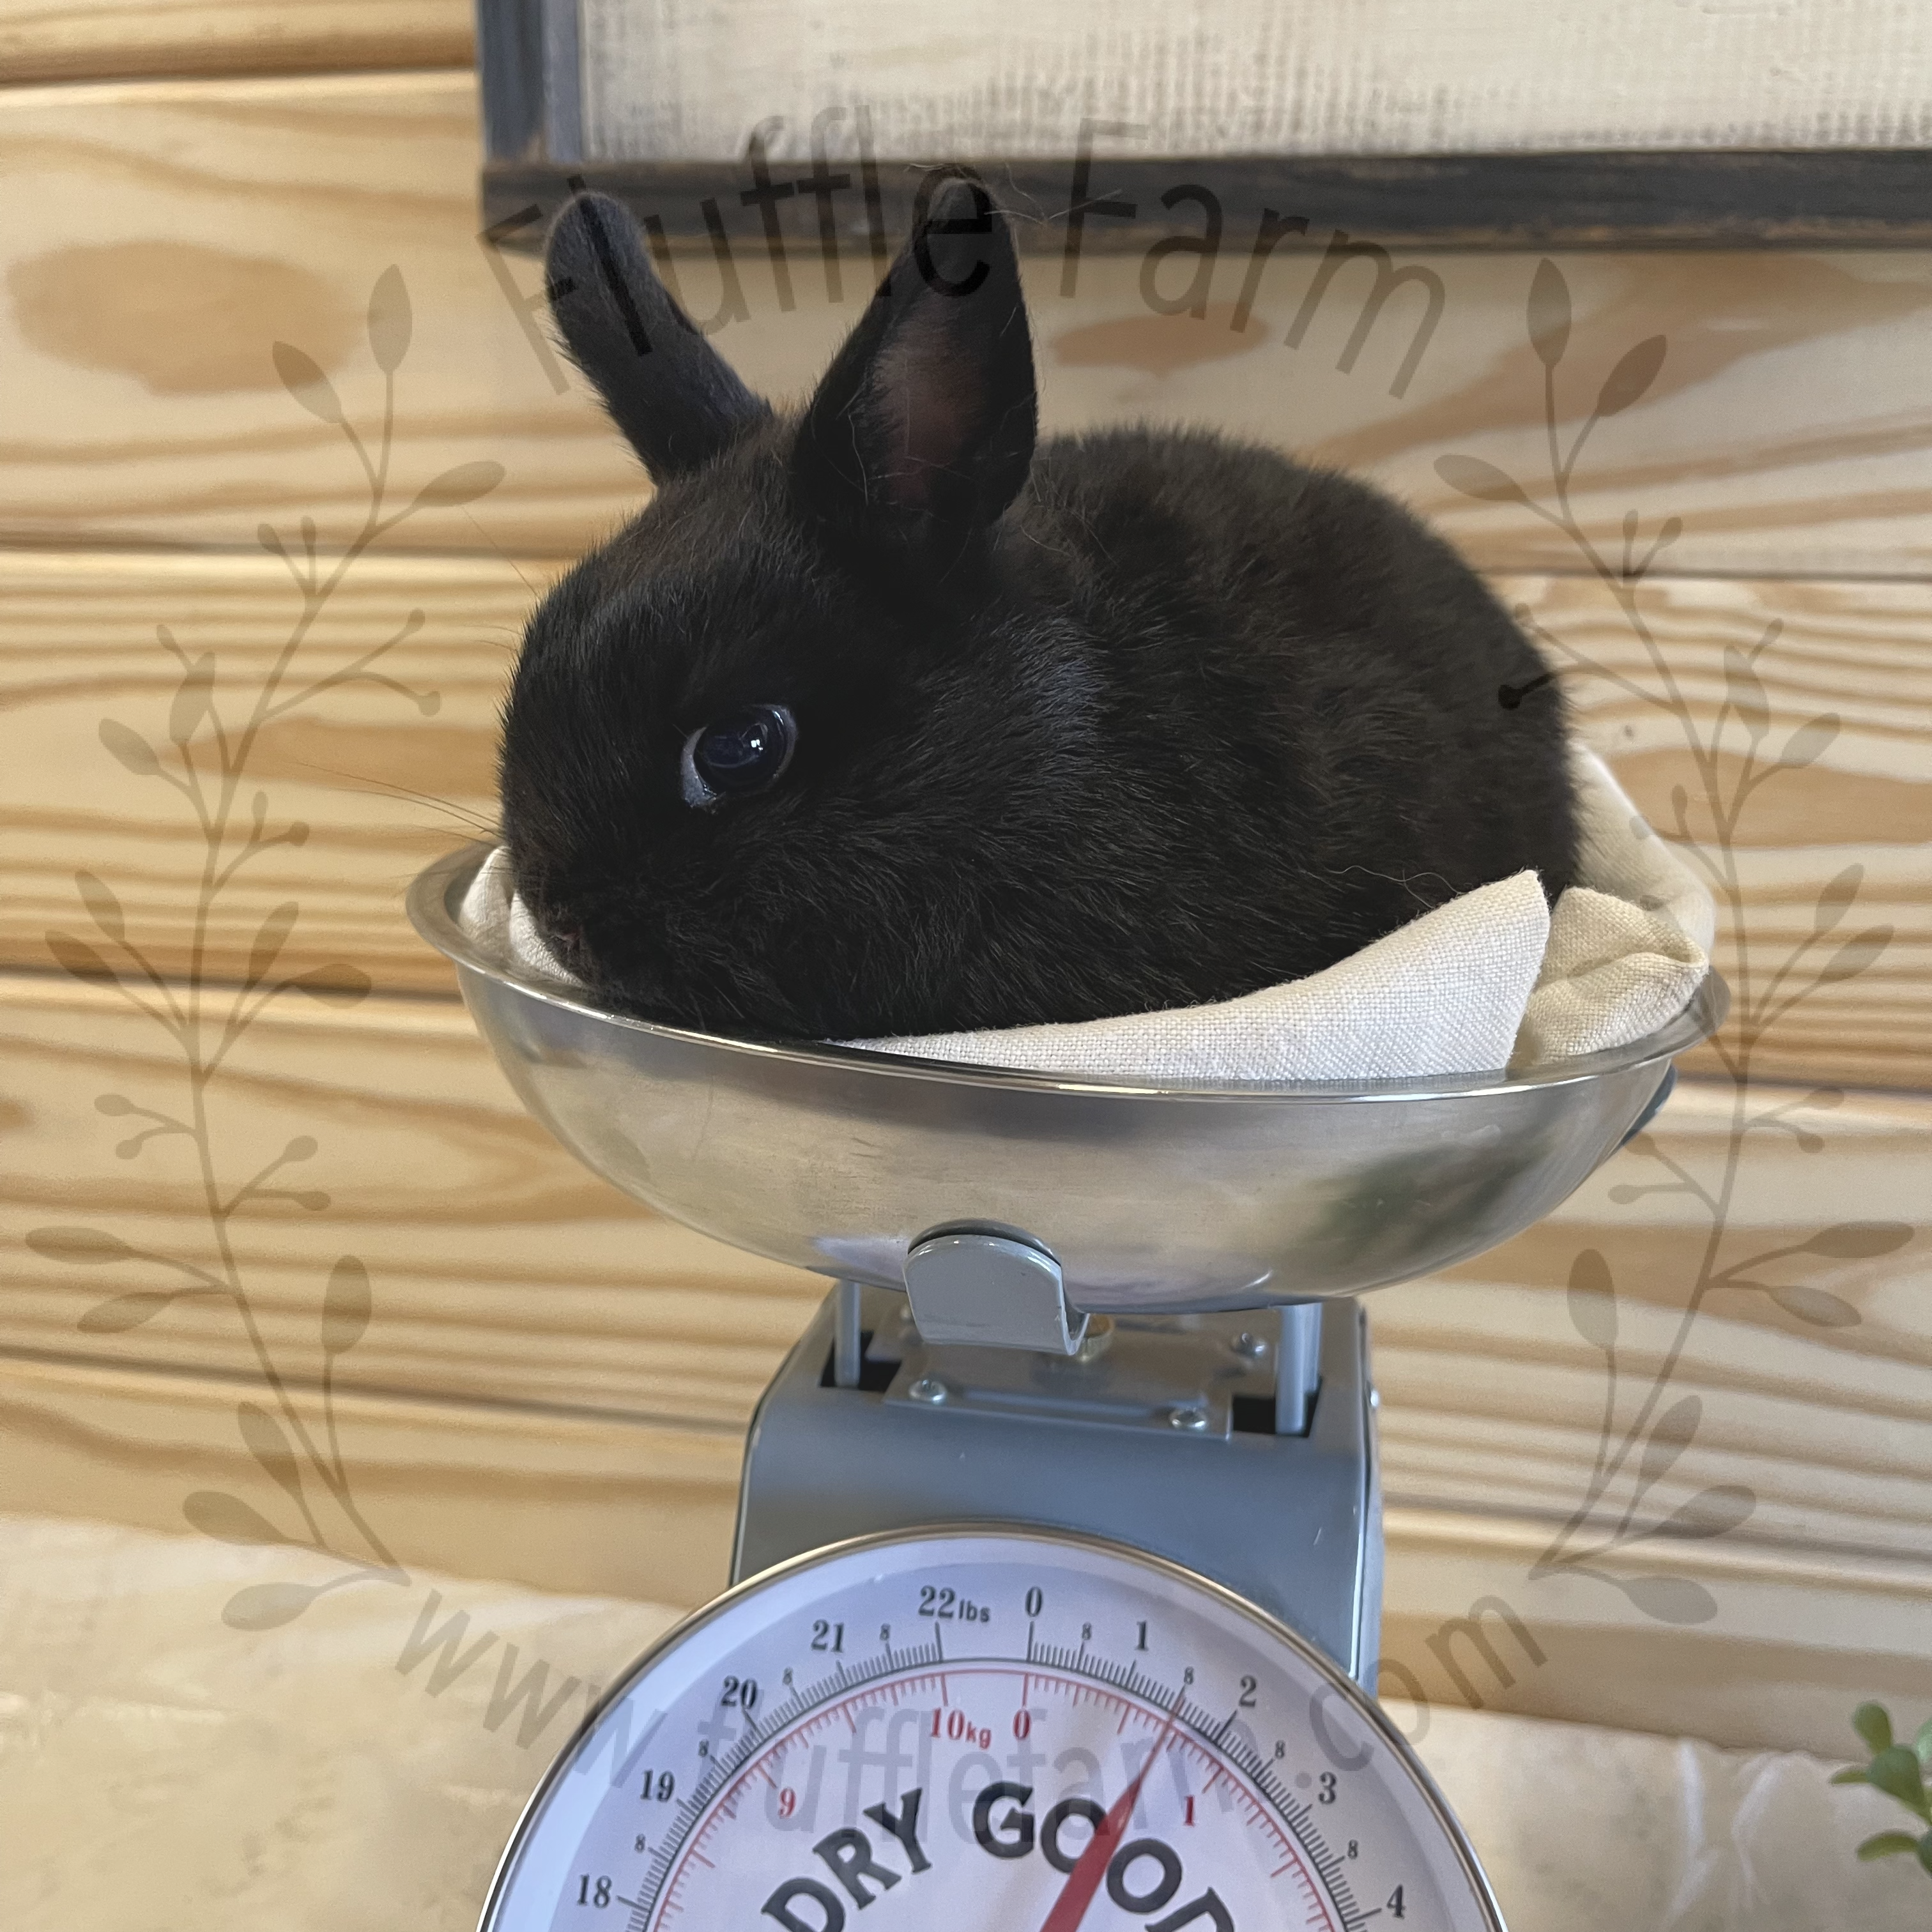 Rabbit Scales for Sale - Rabbit Supplies